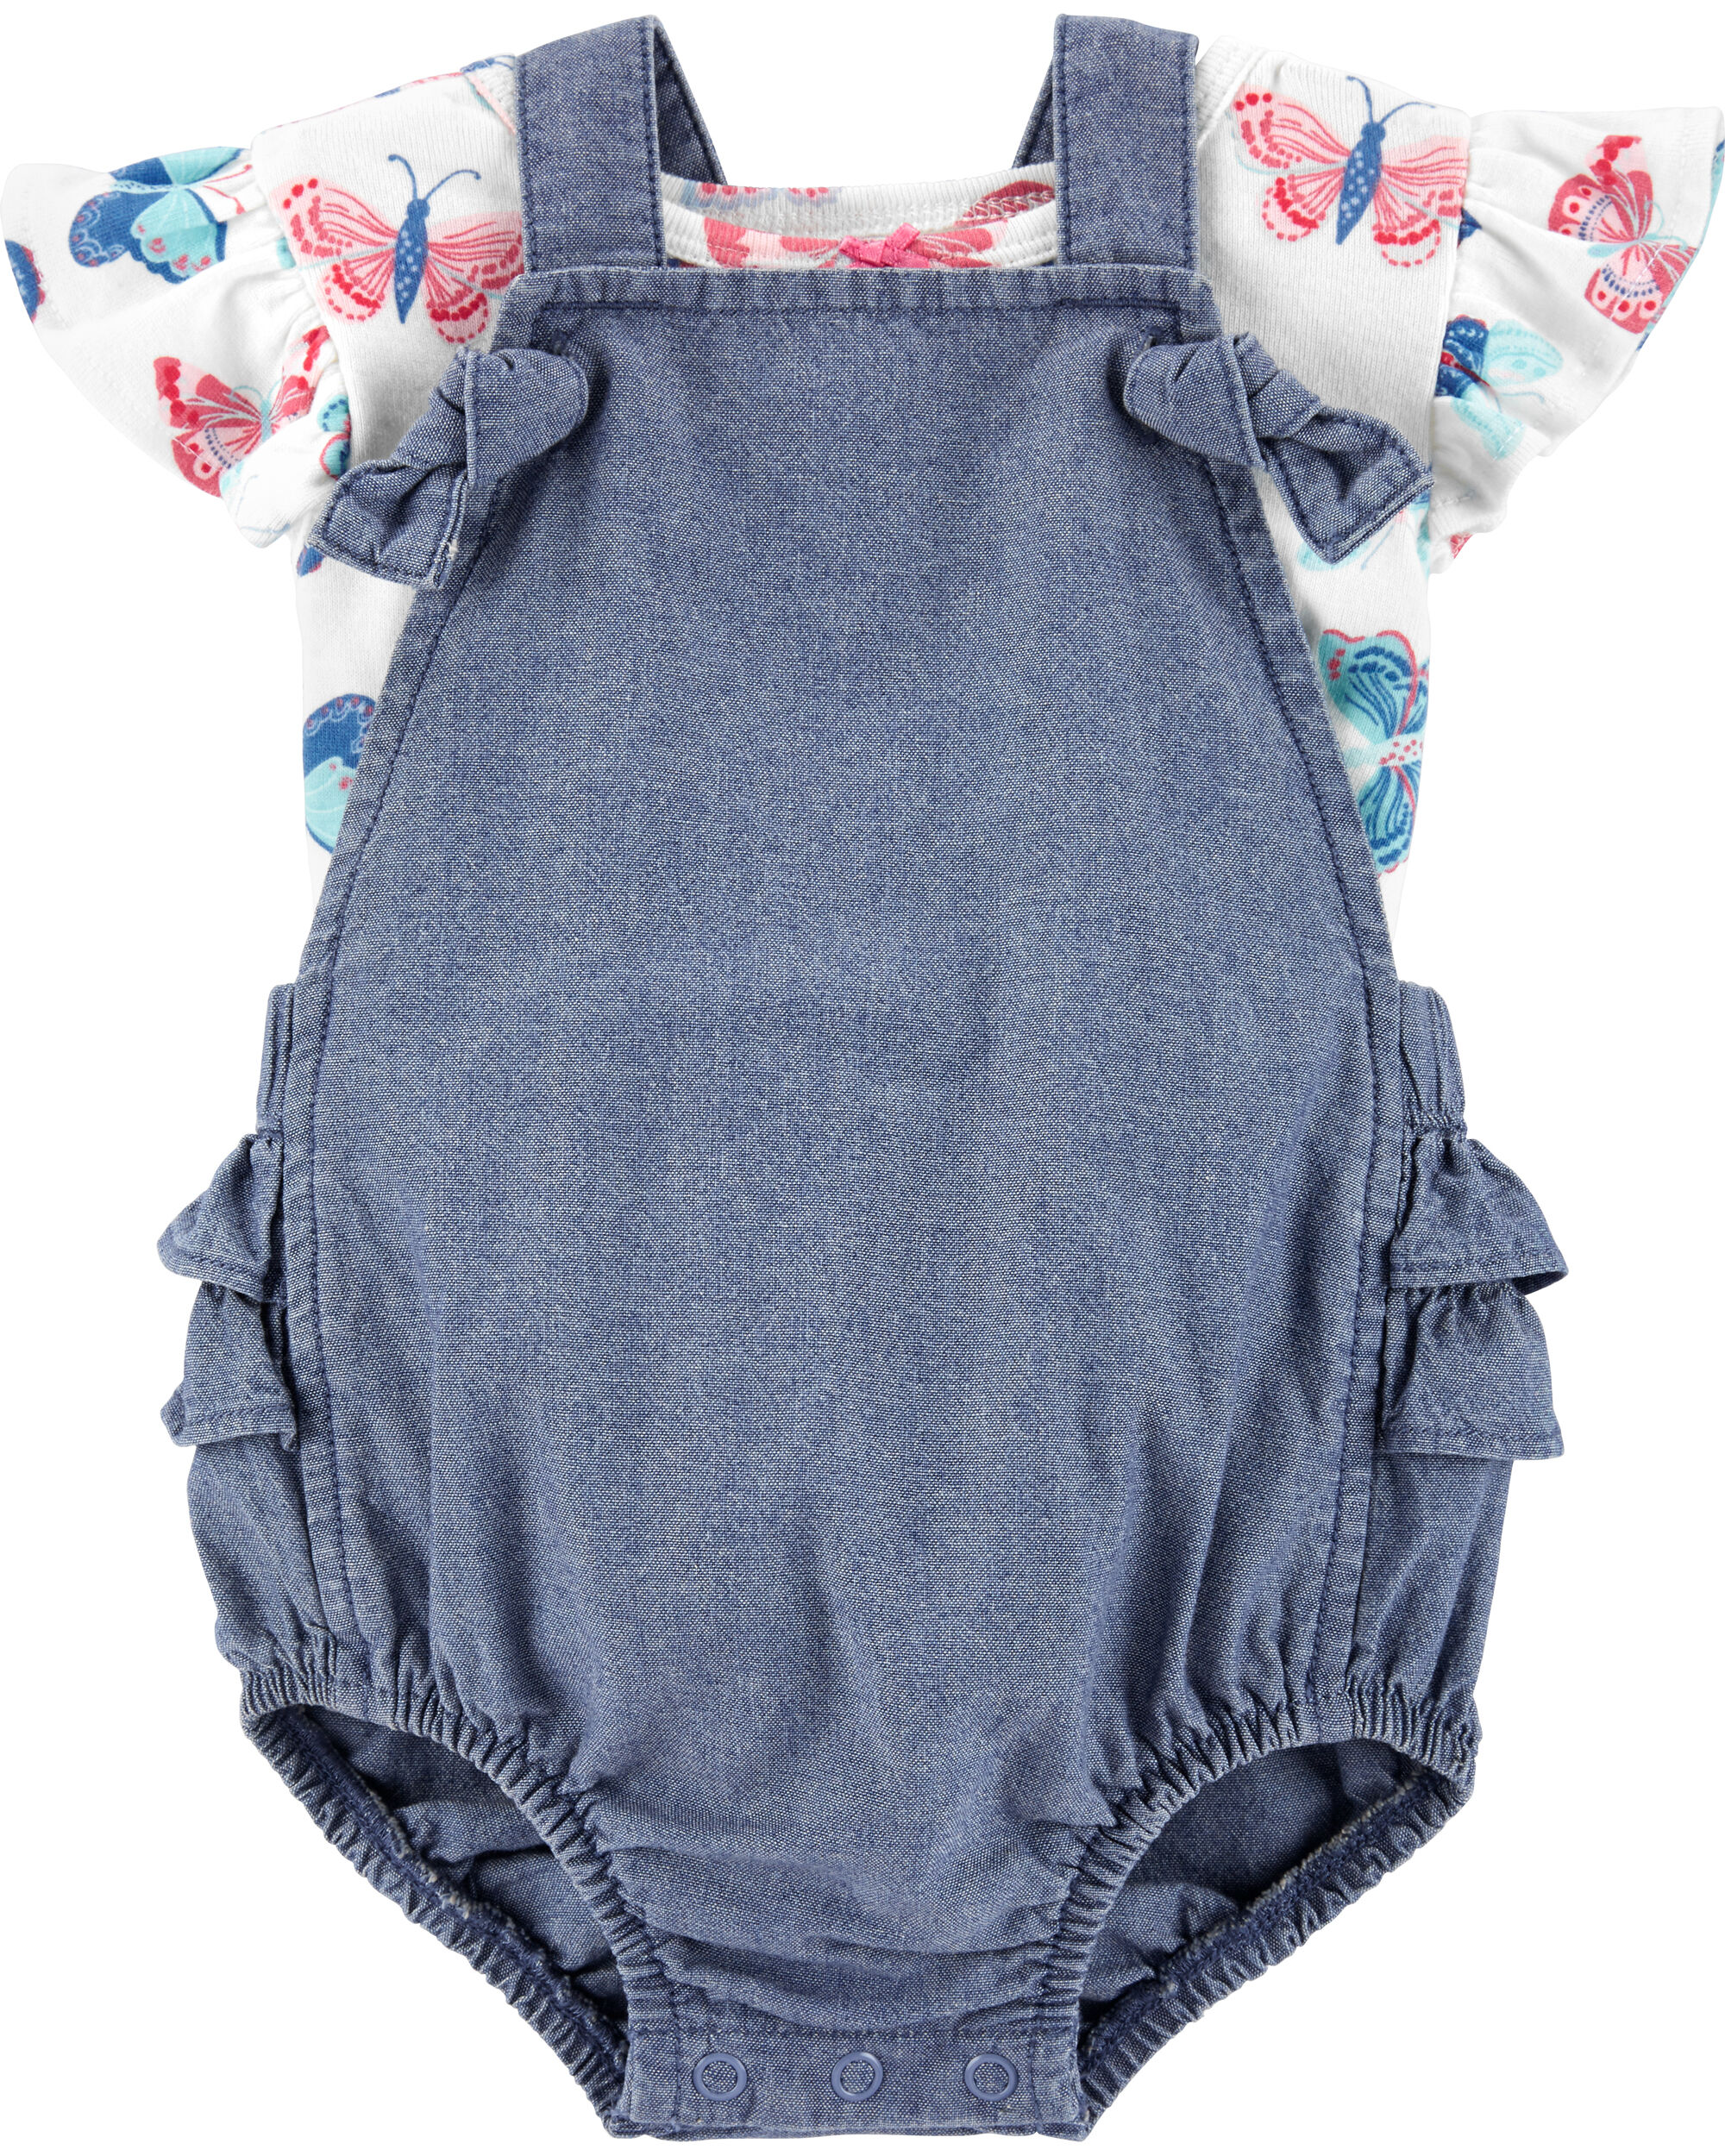 carters baby girl overalls